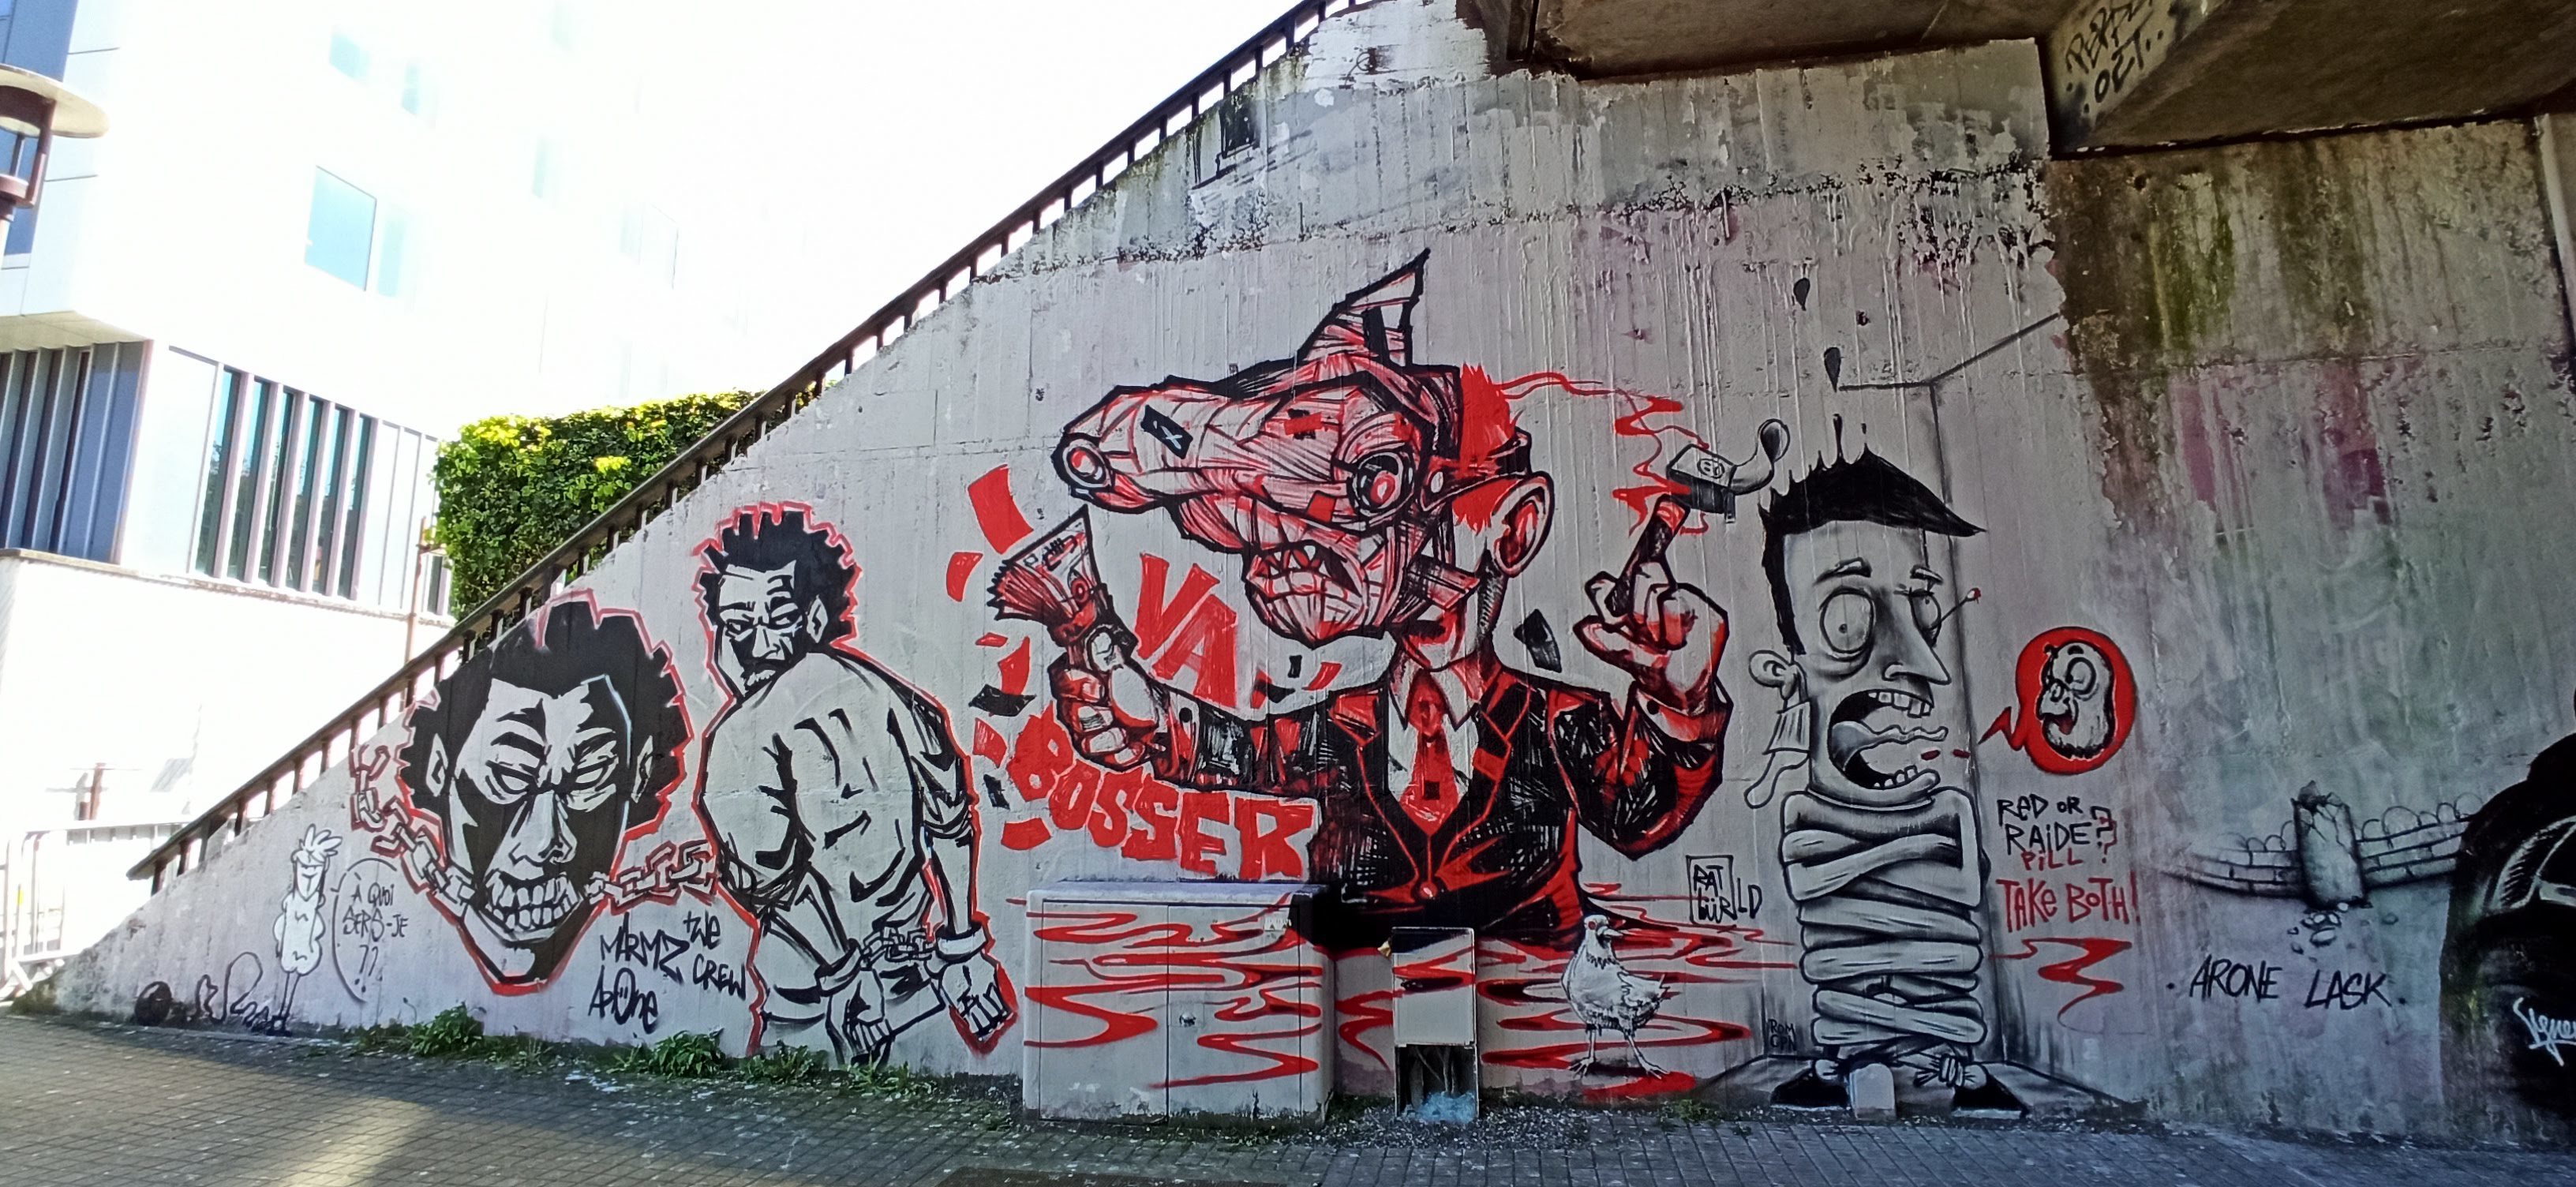 Graffiti 5041 Va bosser capturé par Rabot à Nantes France